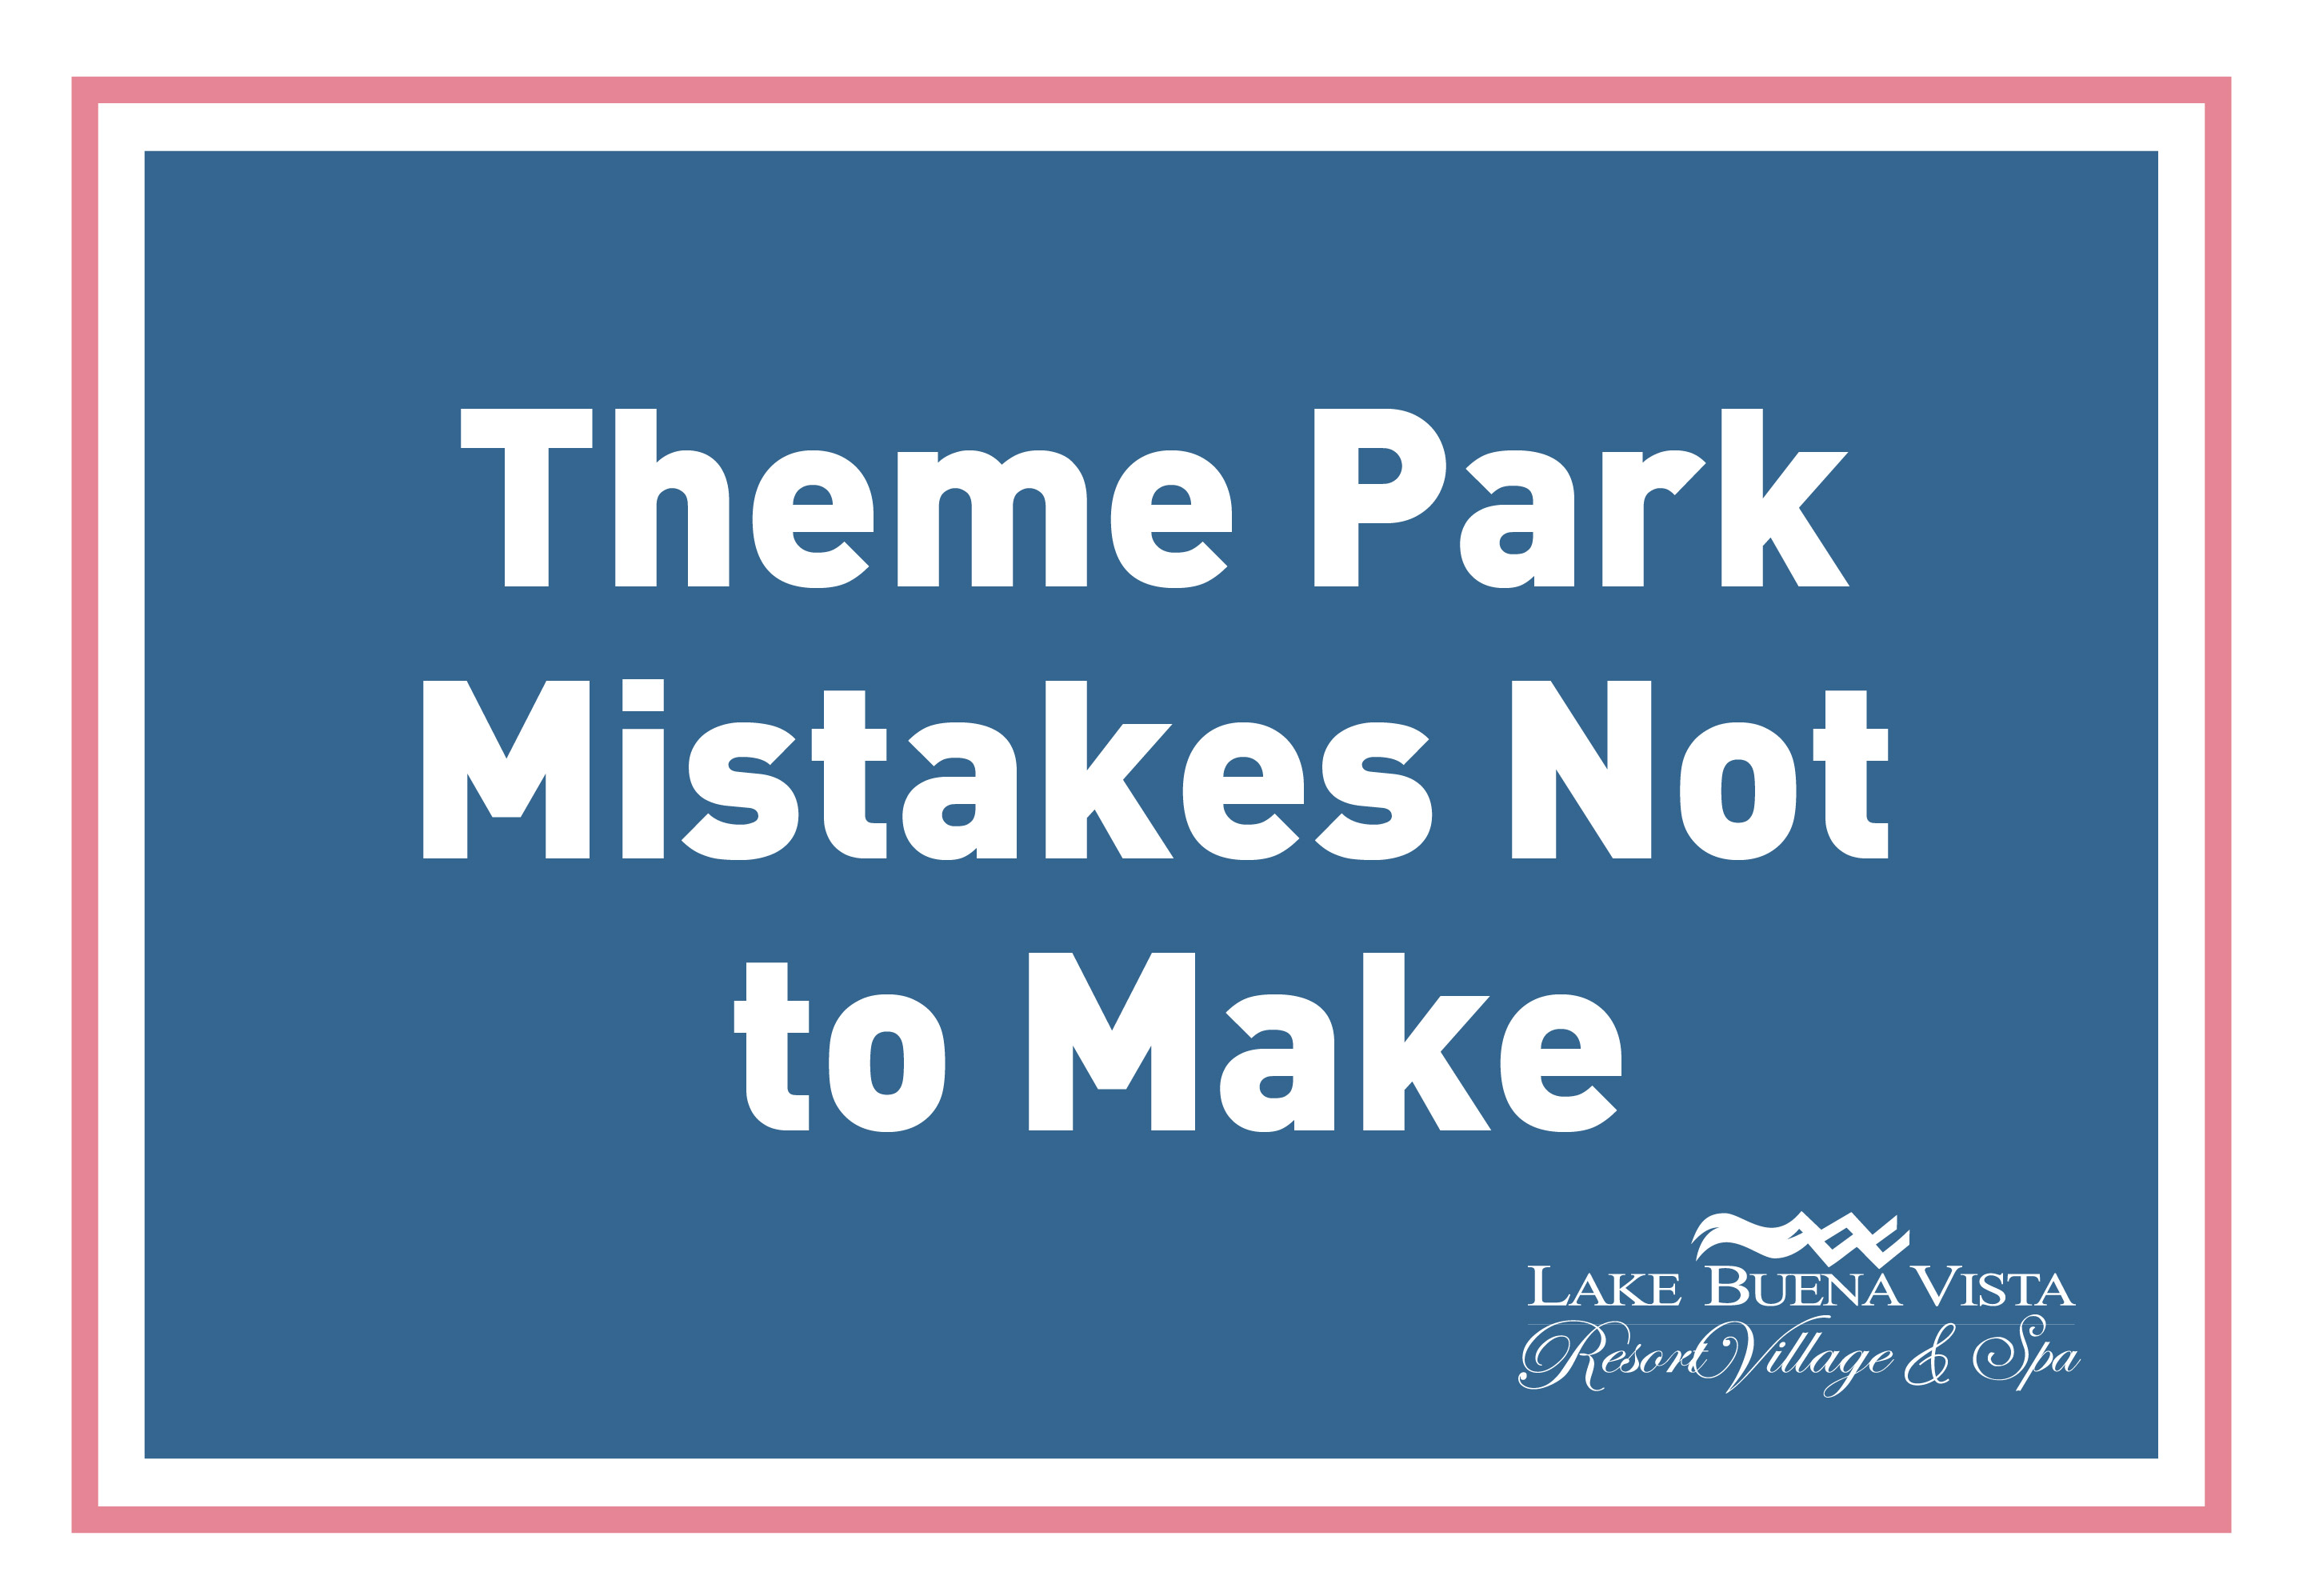 Lake Buena Vista Resort Village & Spa - Mistakes Not to Make